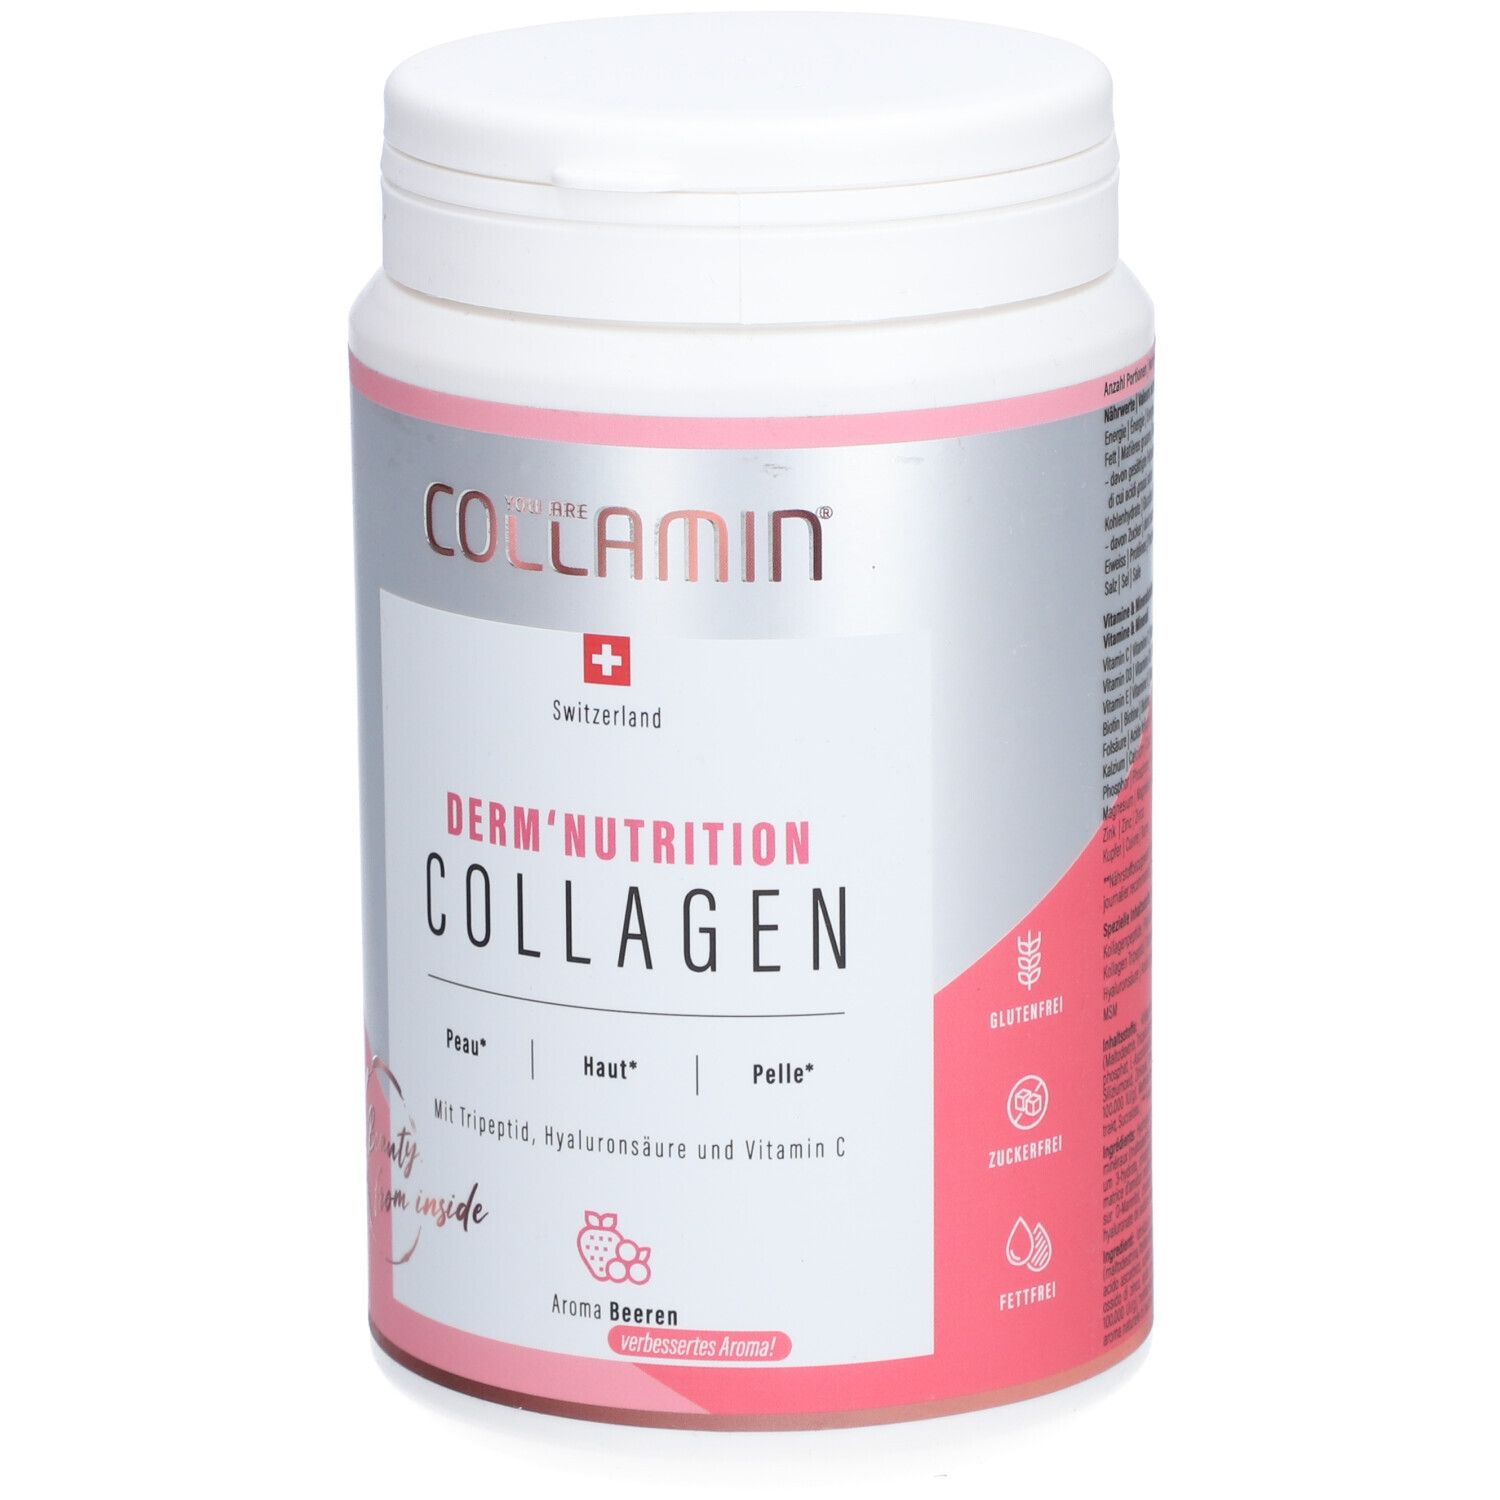 COLLAMIN® Derm' Nutrition Kollagen